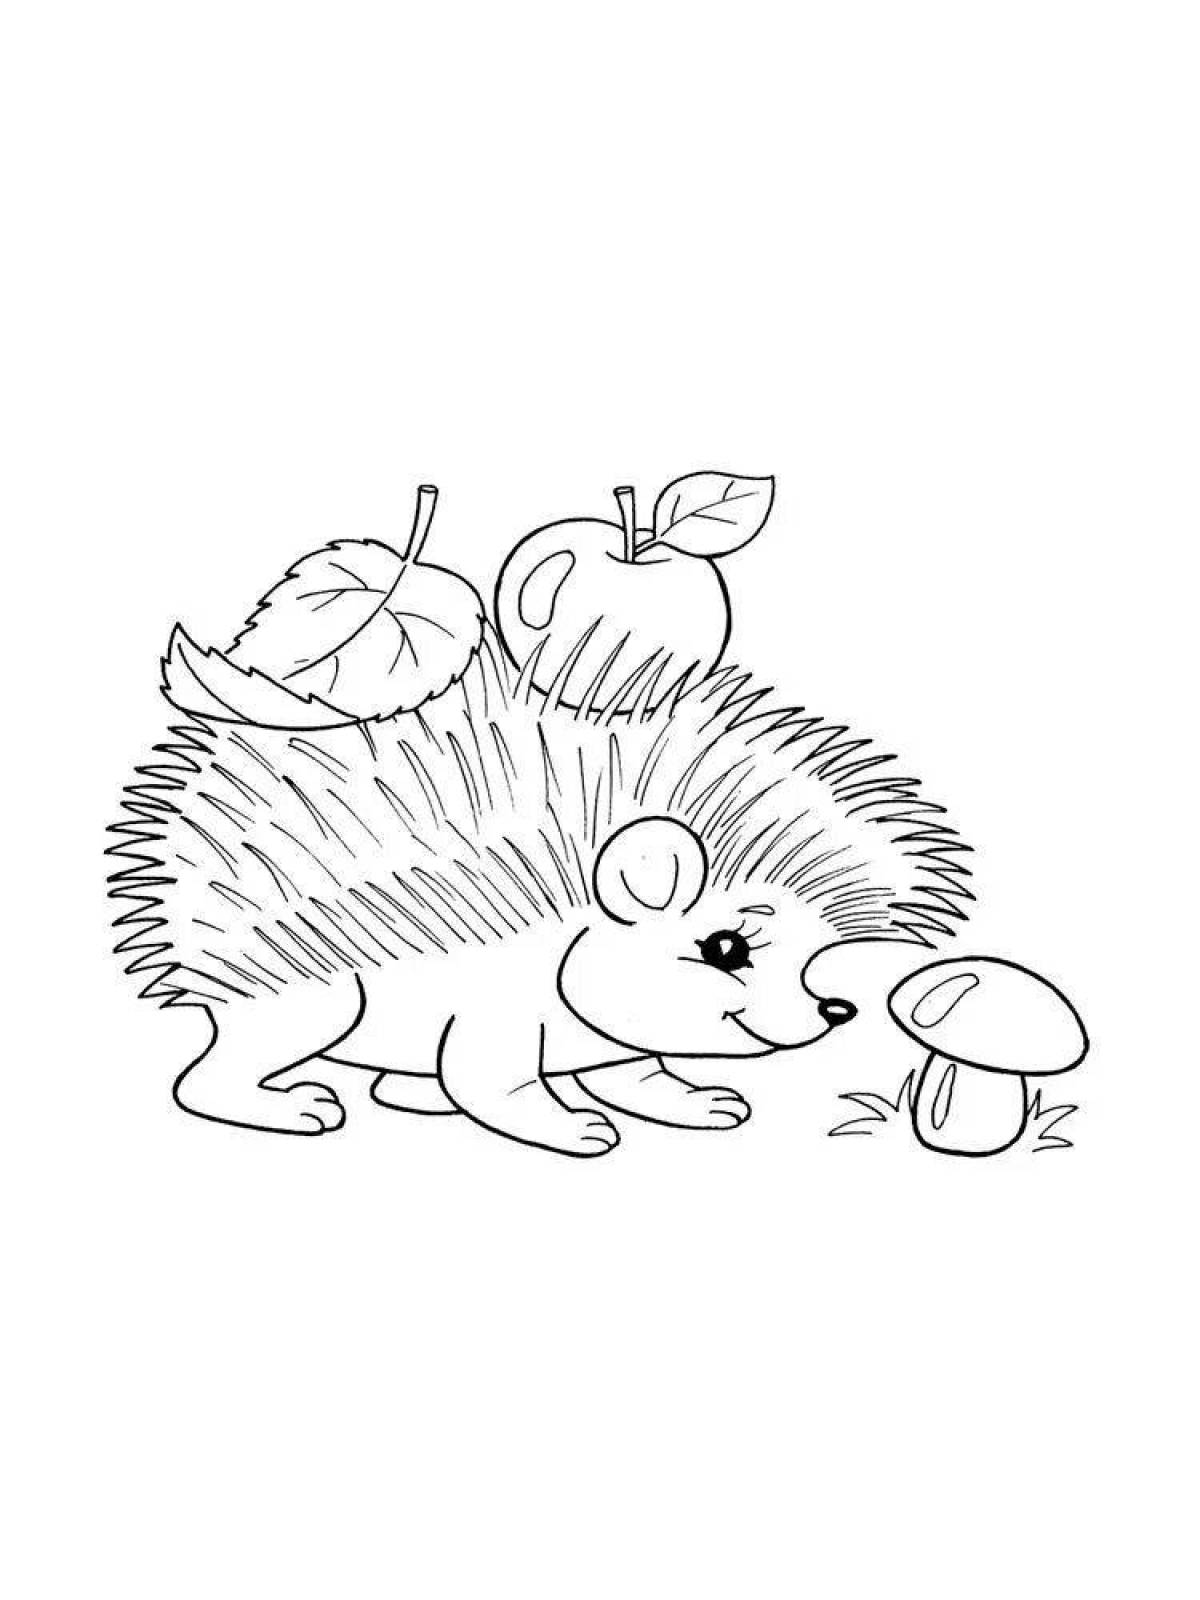 Hedgehog with apple #2